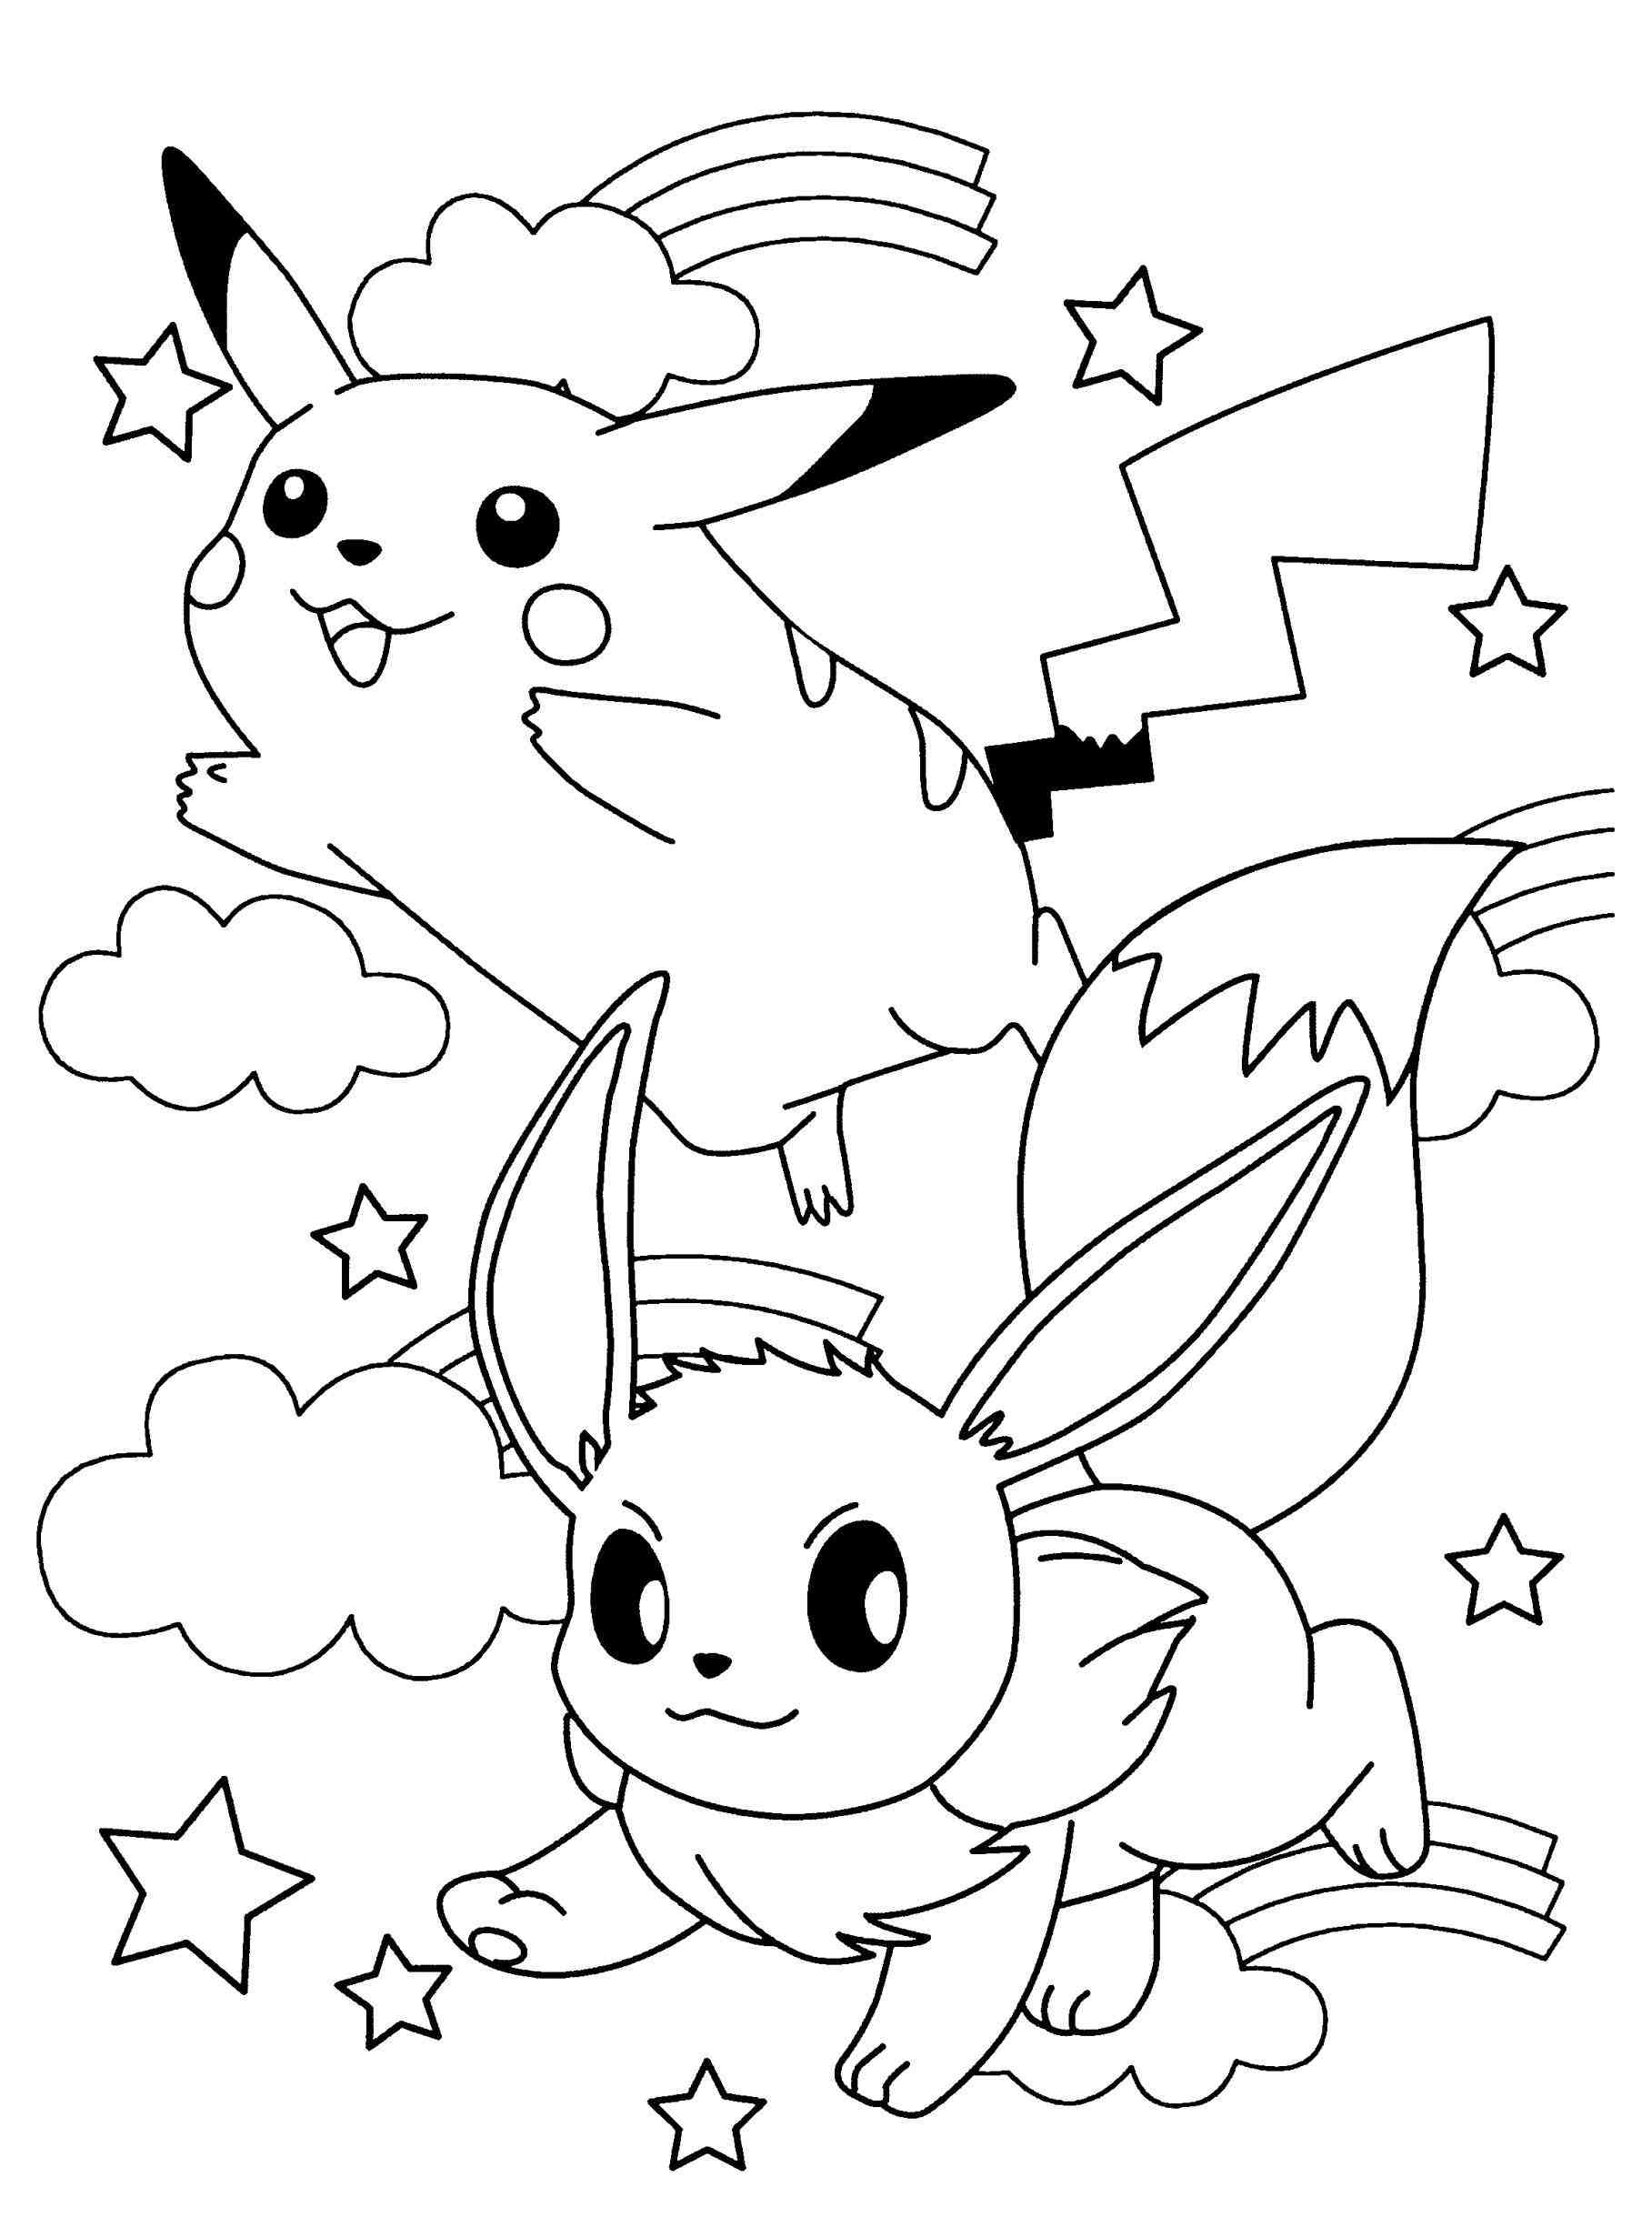 pokemon eevee silhouette - Google Search  Pokemon coloring pages, Pokemon  coloring, Pokemon drawings